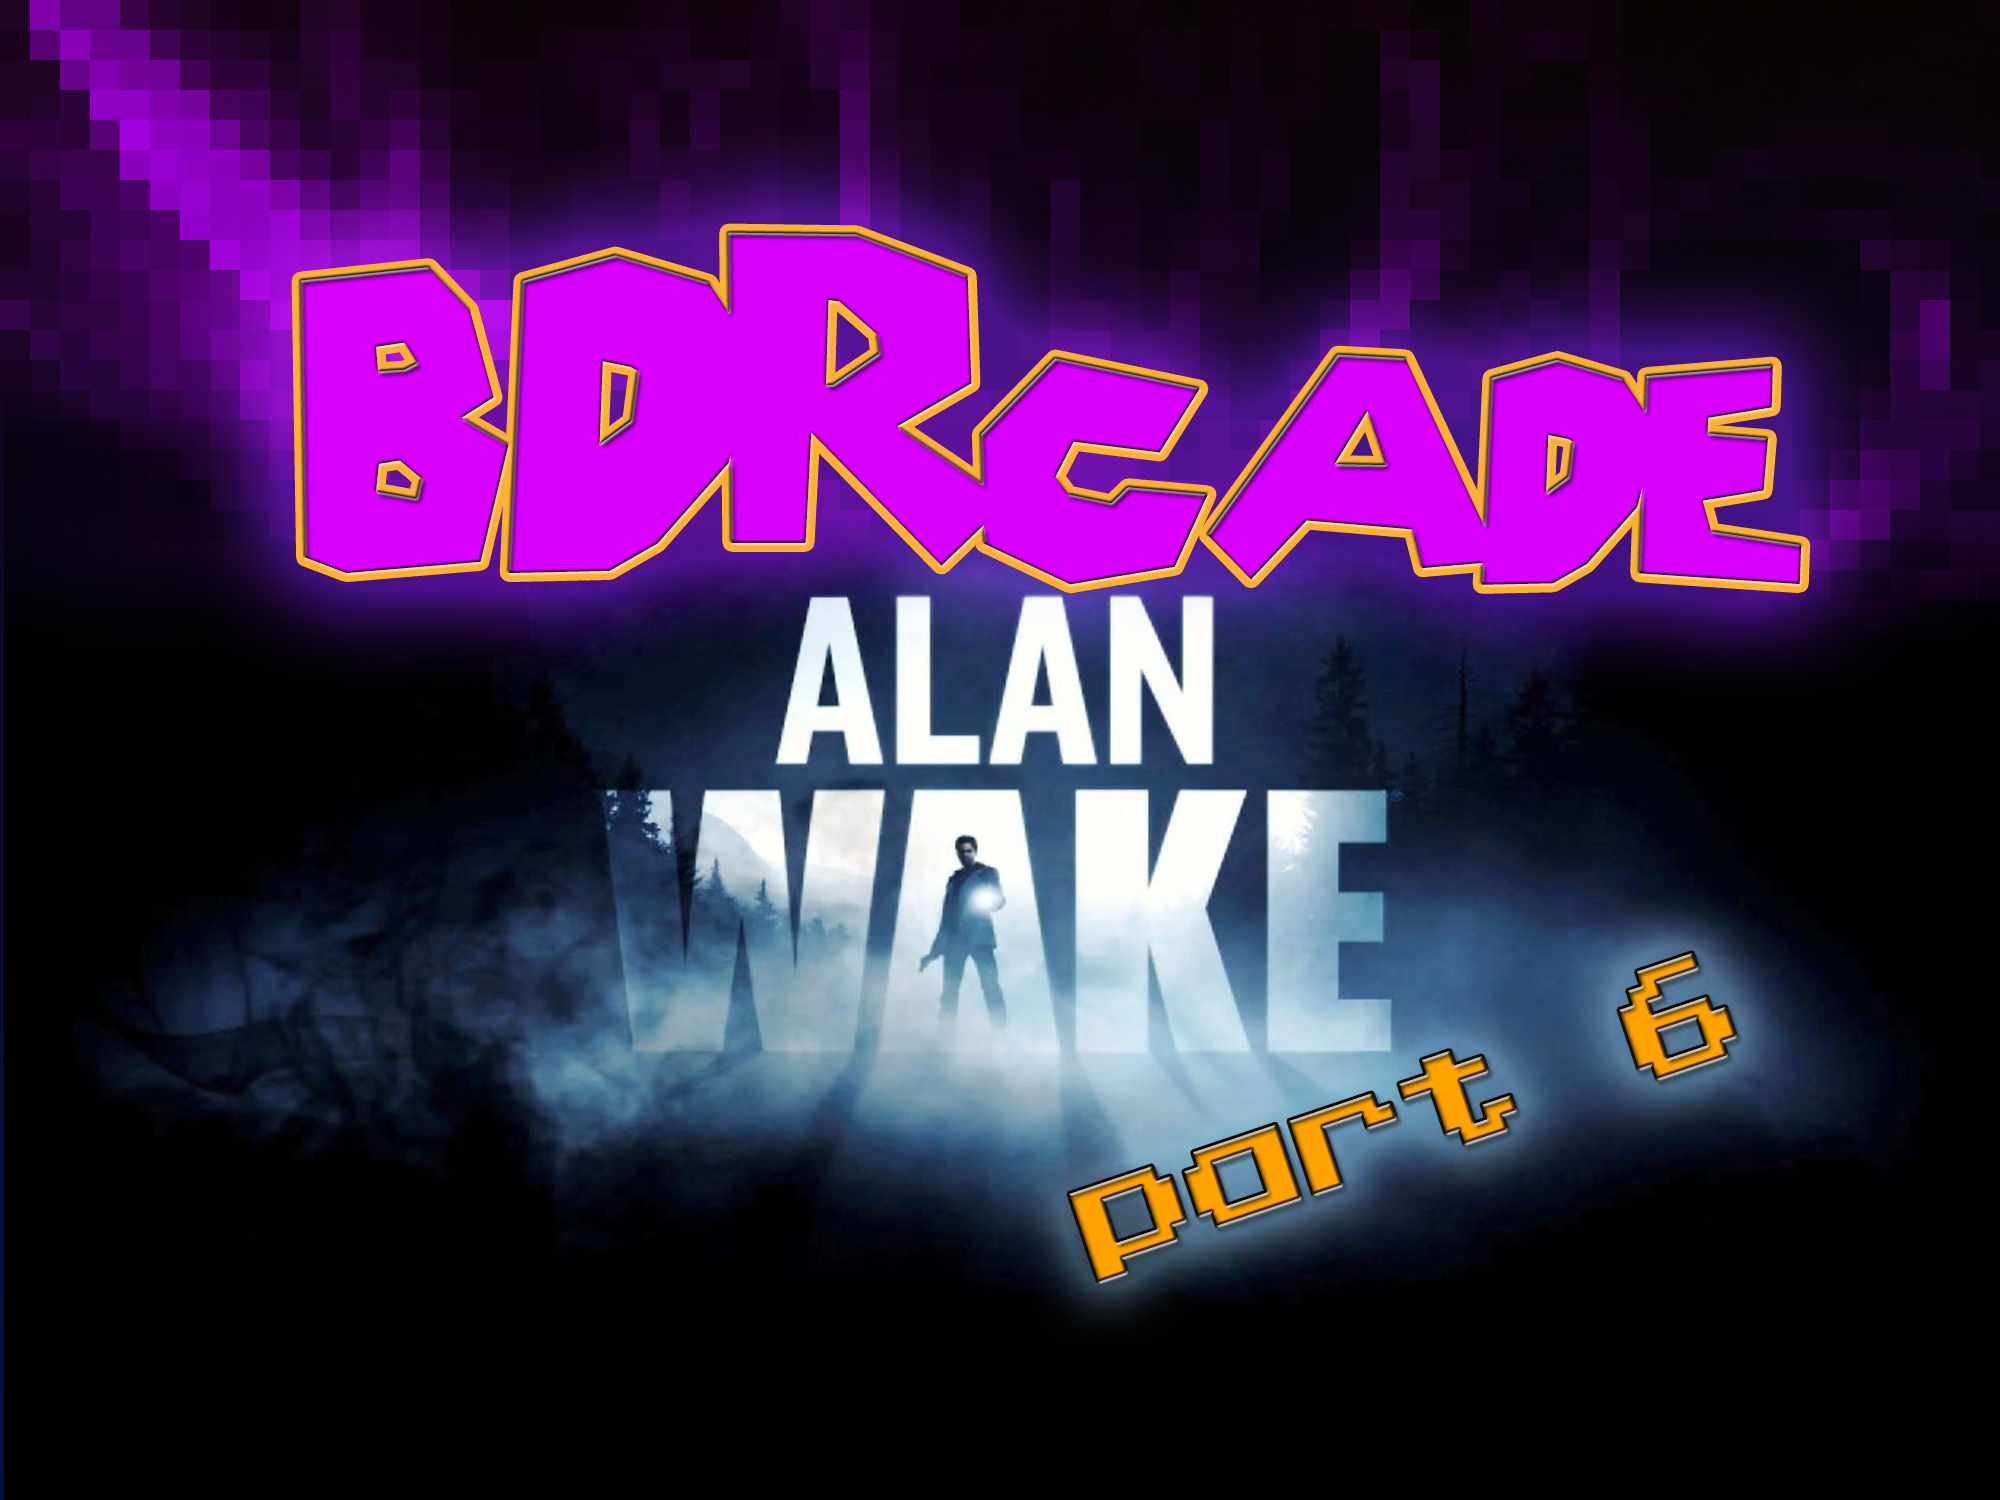 Alan Wake: Everyone is Yelling at Me! – PART 6 – BDRcade